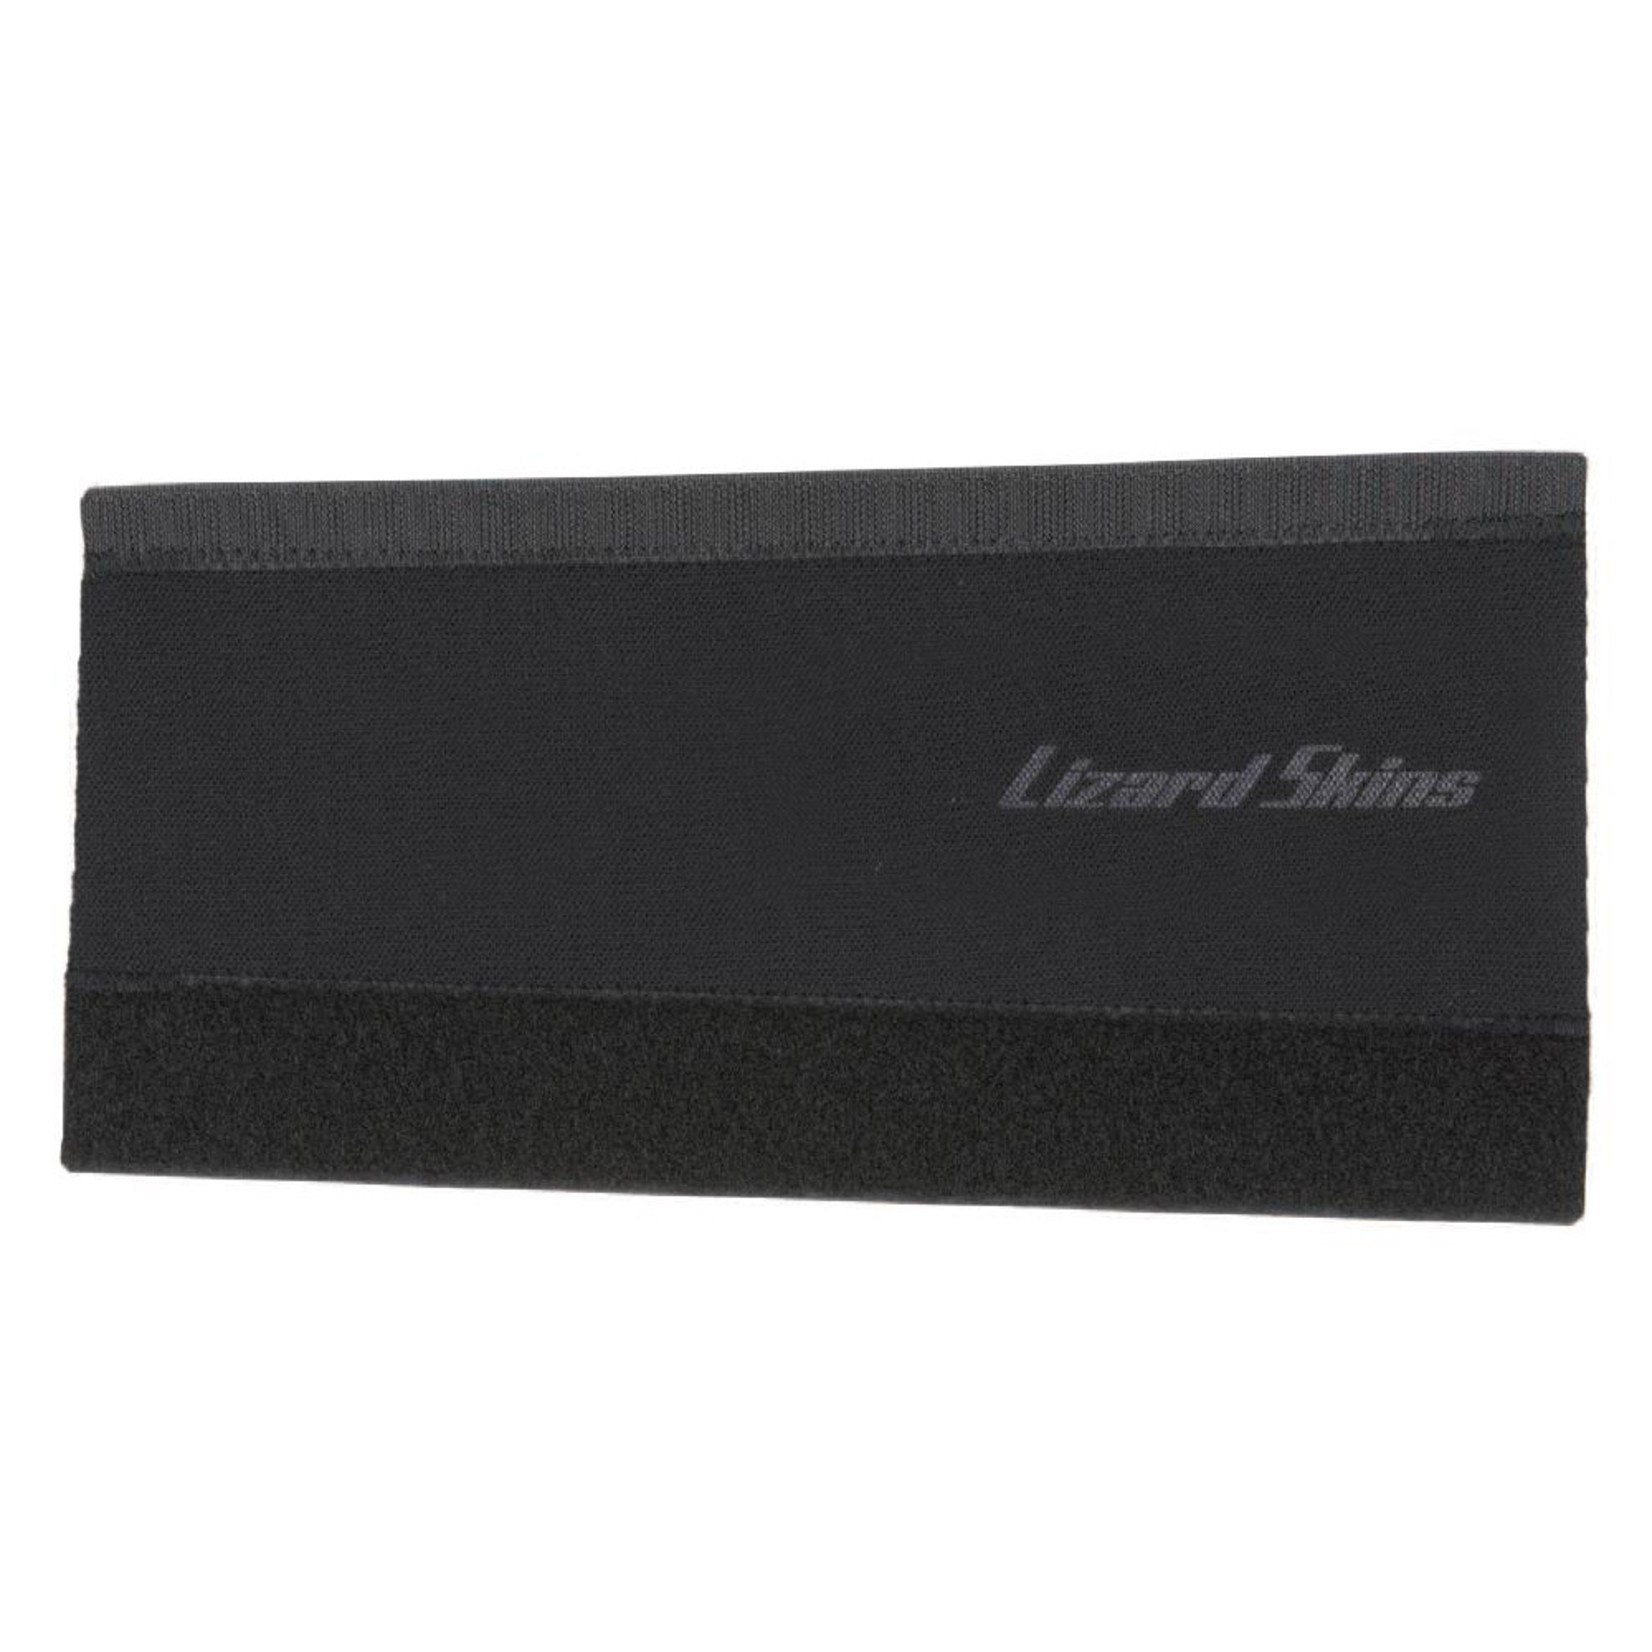 Lizard Skin Lizard Skins Neoprene Chainstay Protectors - 280mm - Small - Black